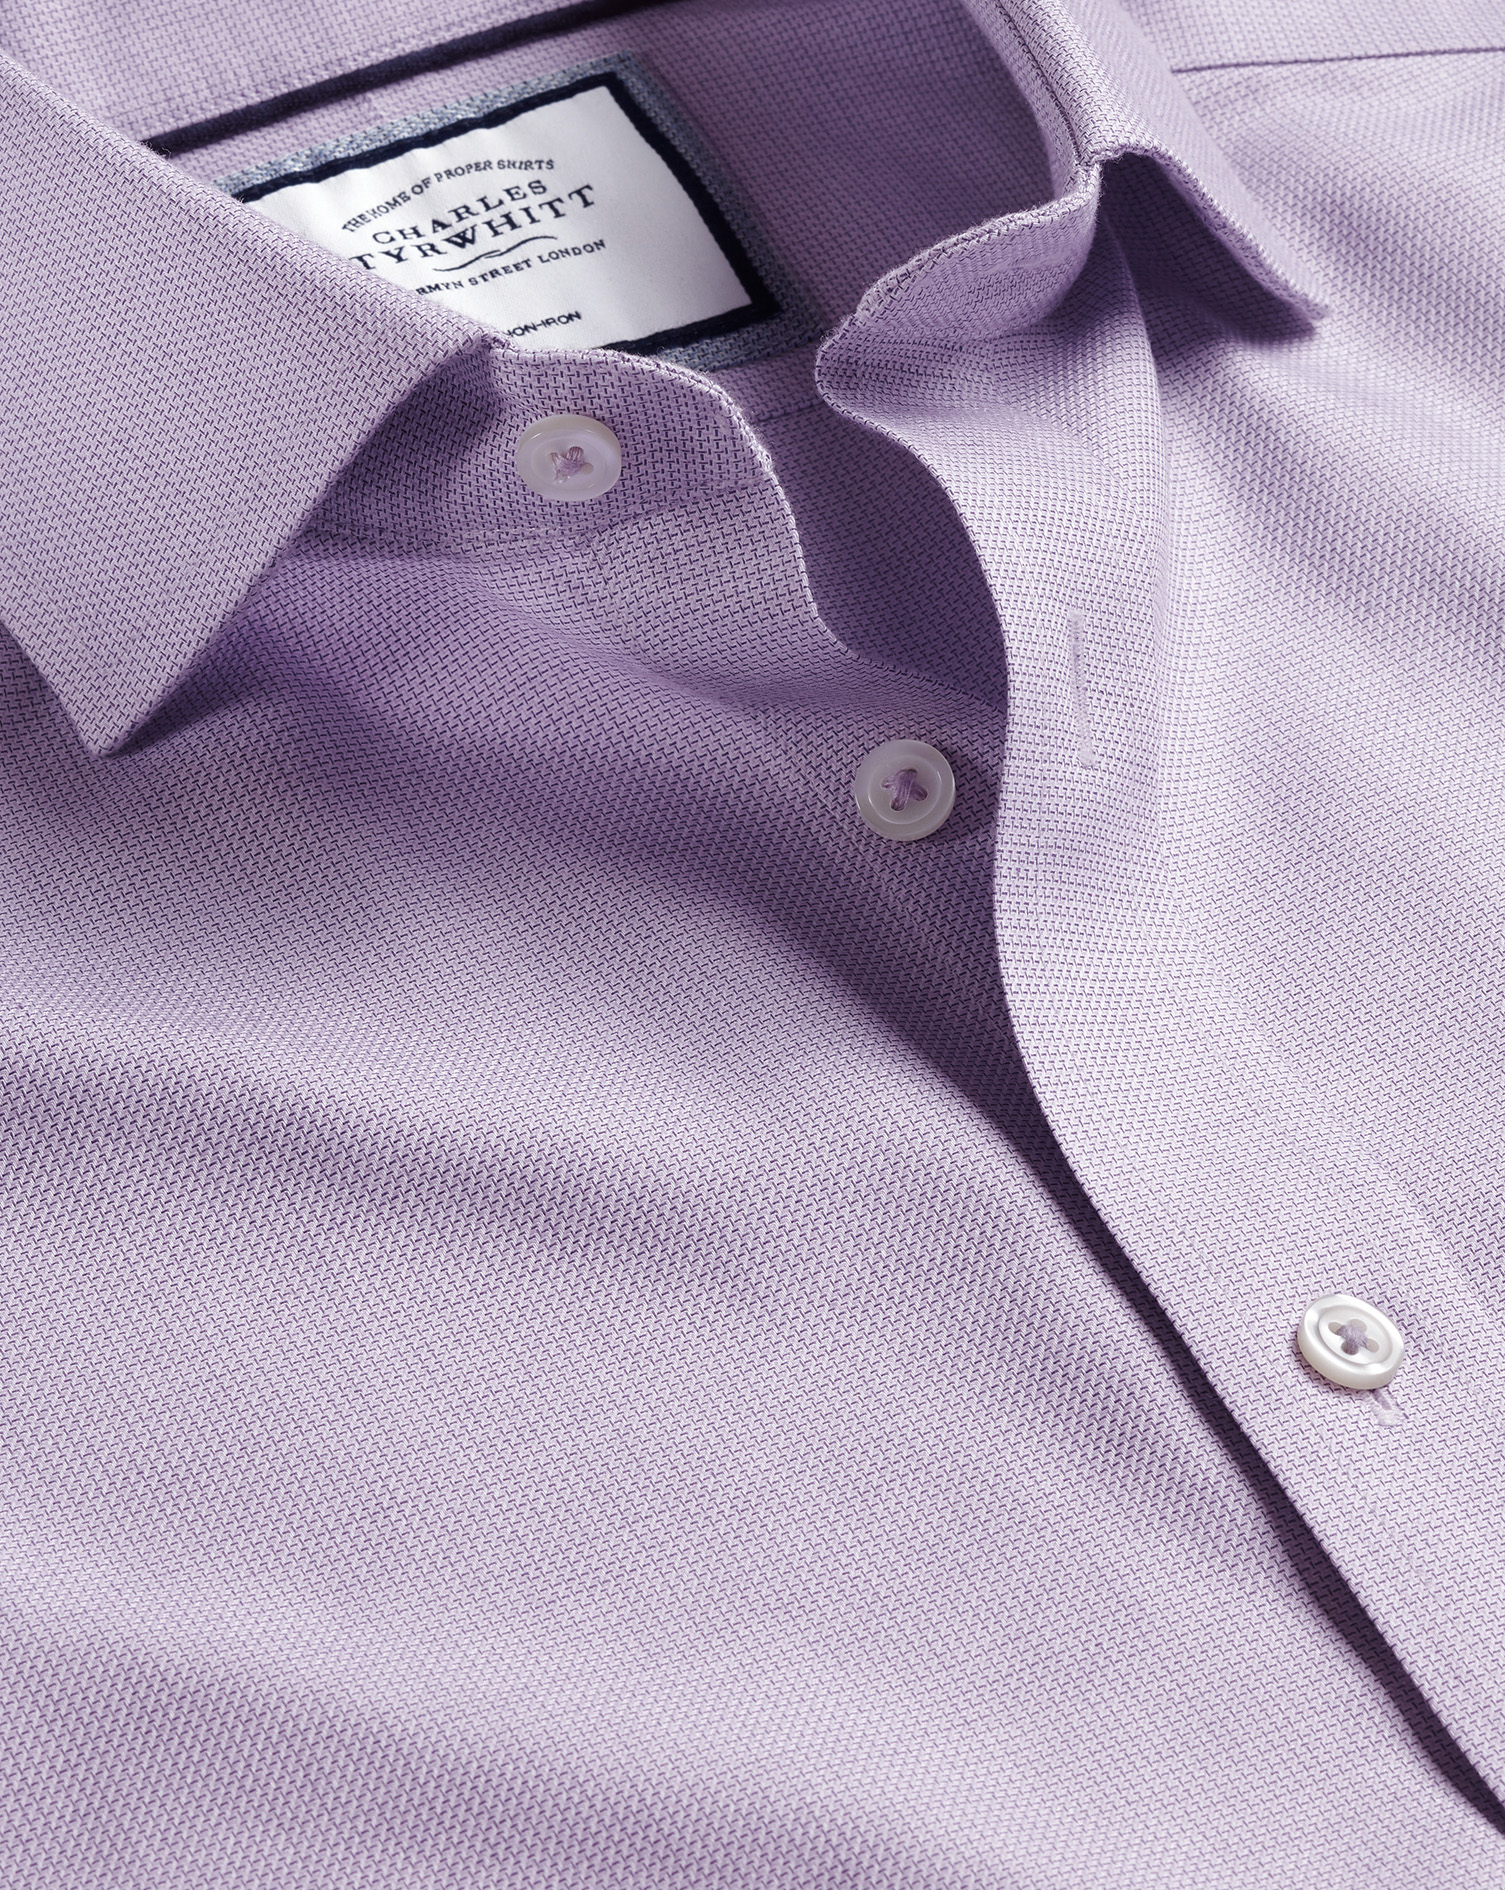 Cutaway Collar Non-Iron Richmond Weave Cotton Dress Shirt - Mauve Purple French Cuff Size 16/33
